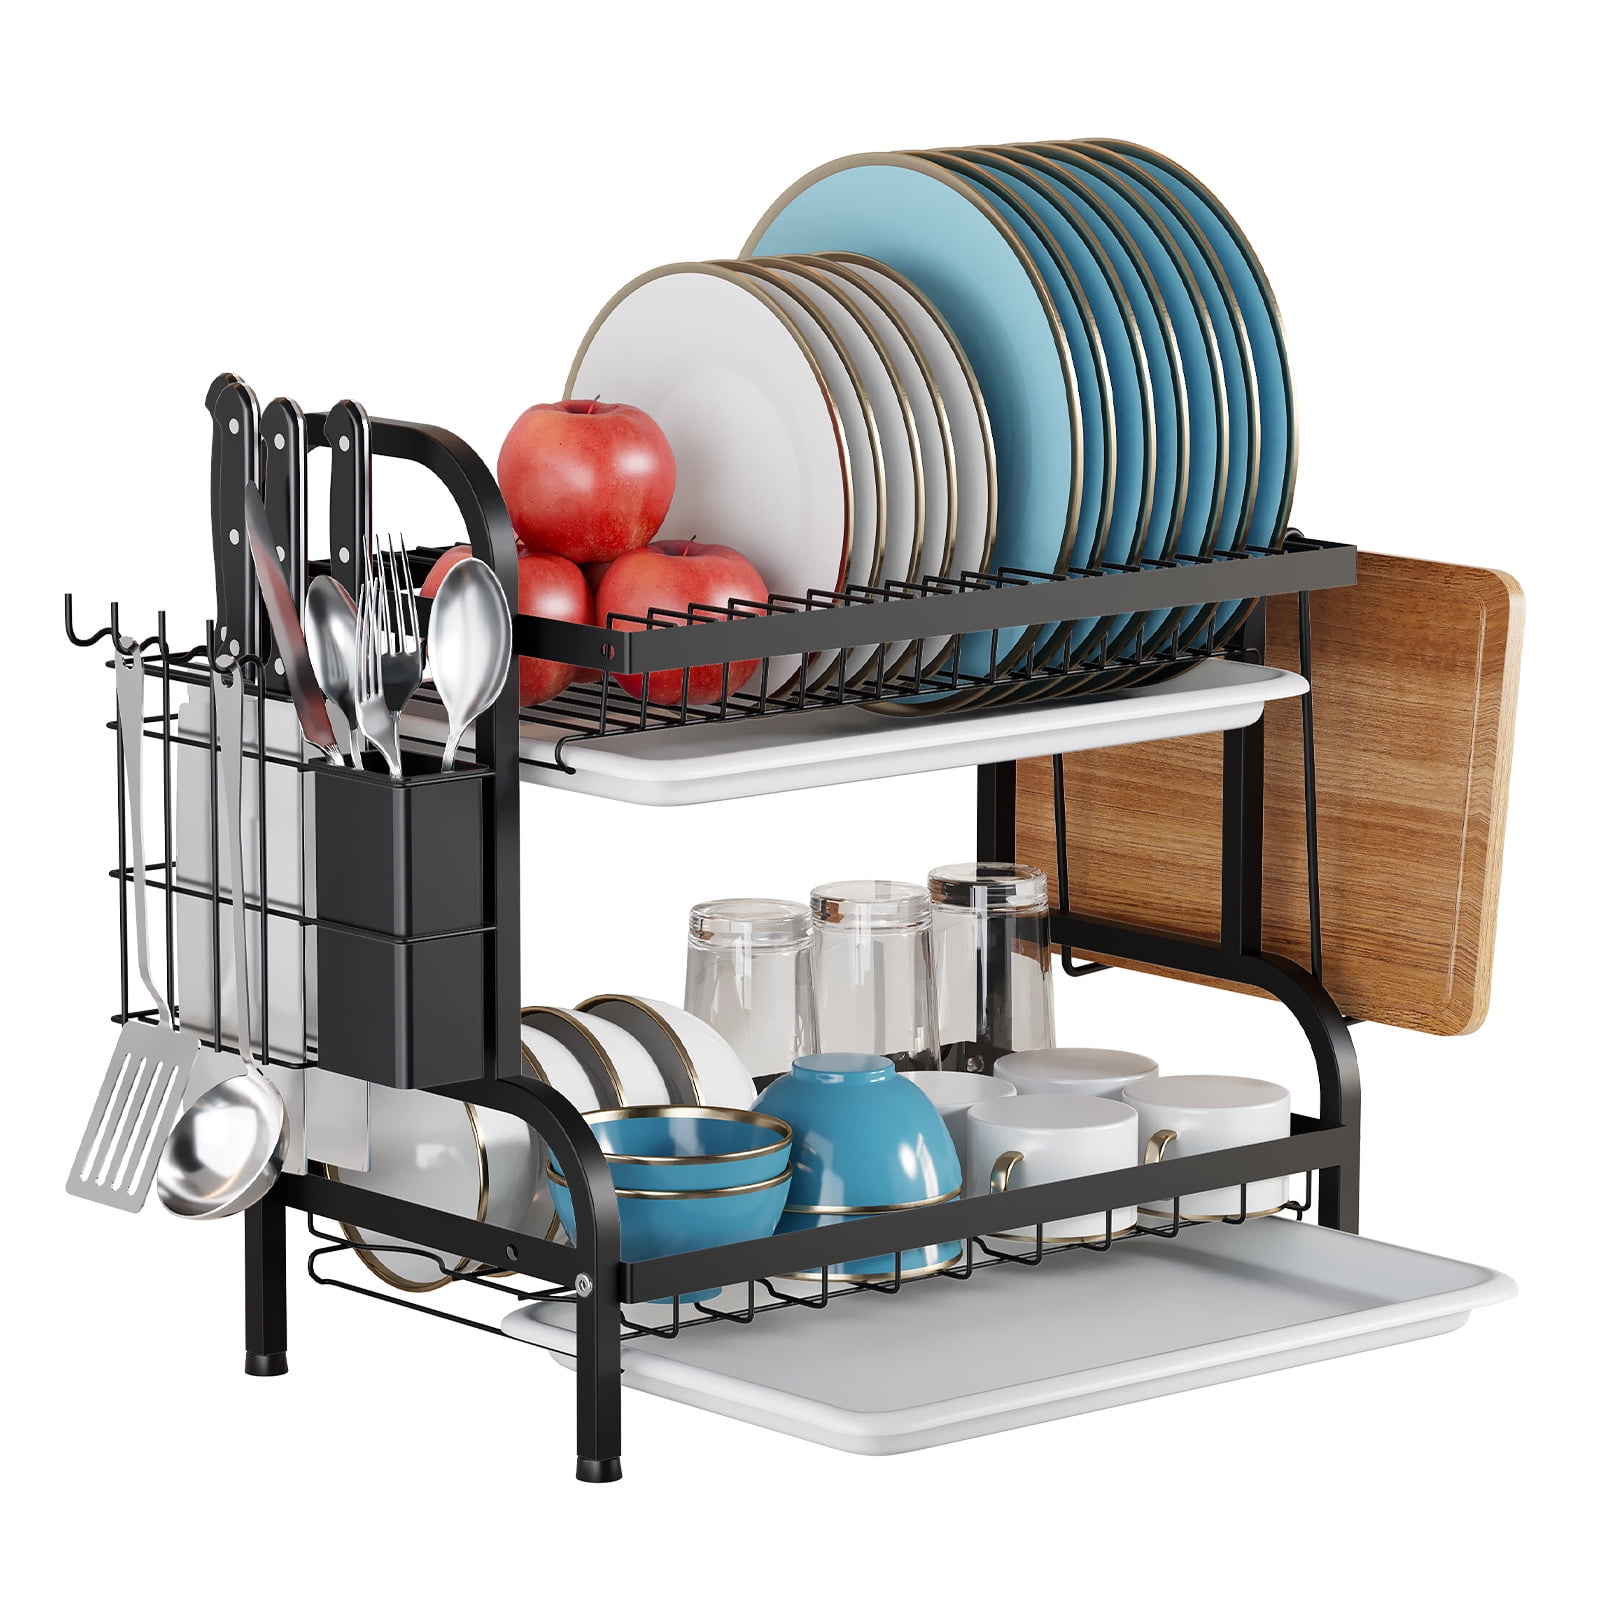  GSlife Dish Drying Rack with Drainboard - Dish Racks